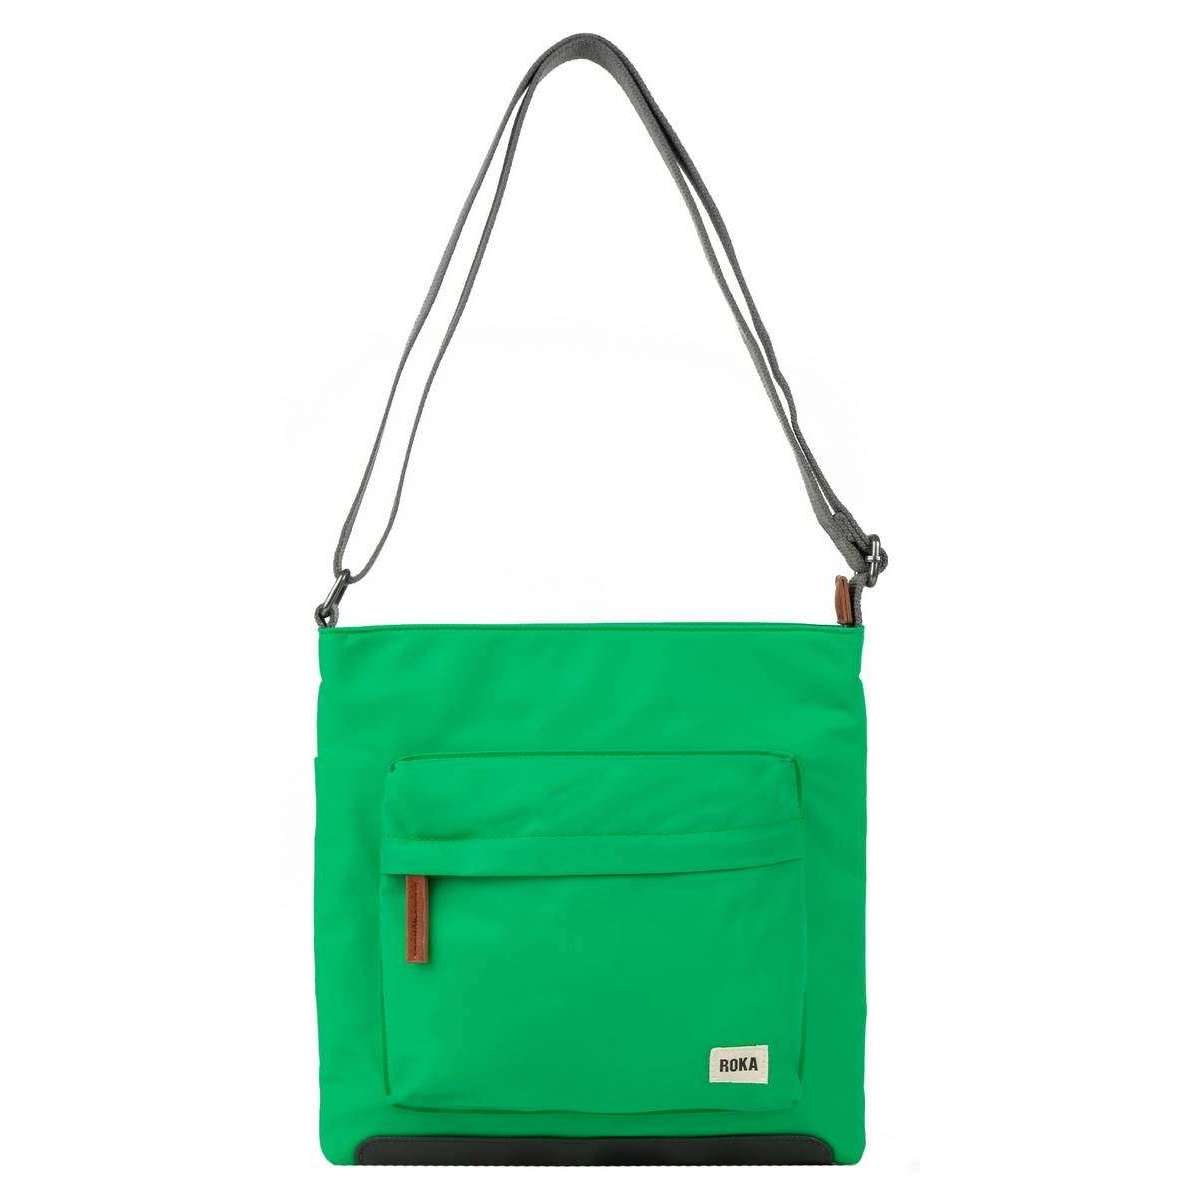 Roka Kennington B Medium Sustainable Nylon Cross Body Bag - Green Apple